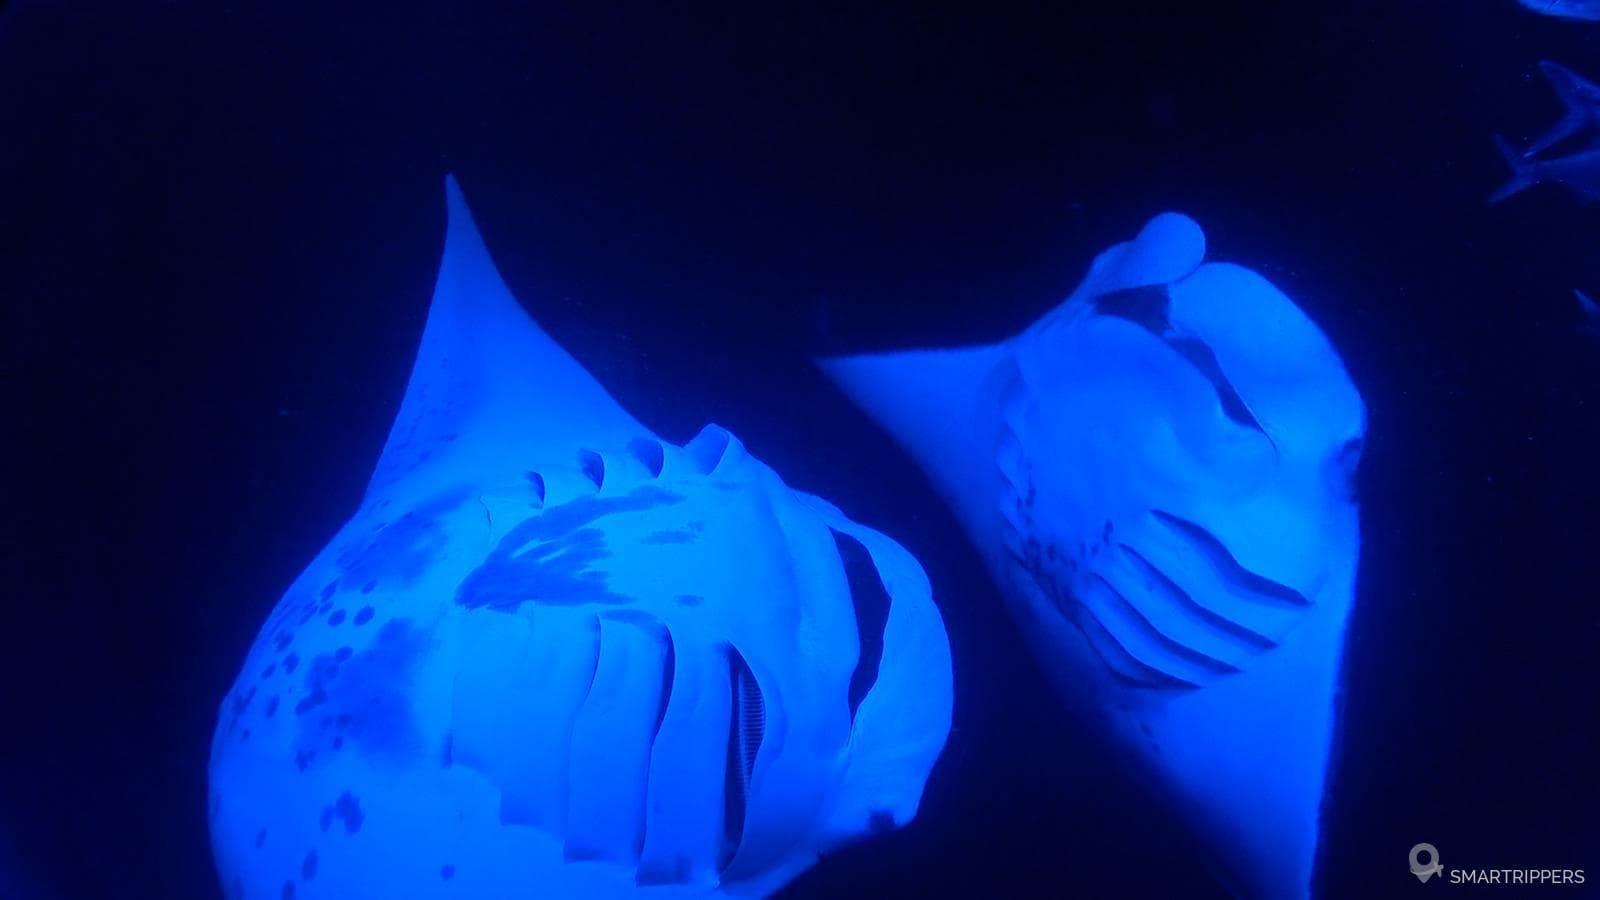 Manta rays snorkel or dive